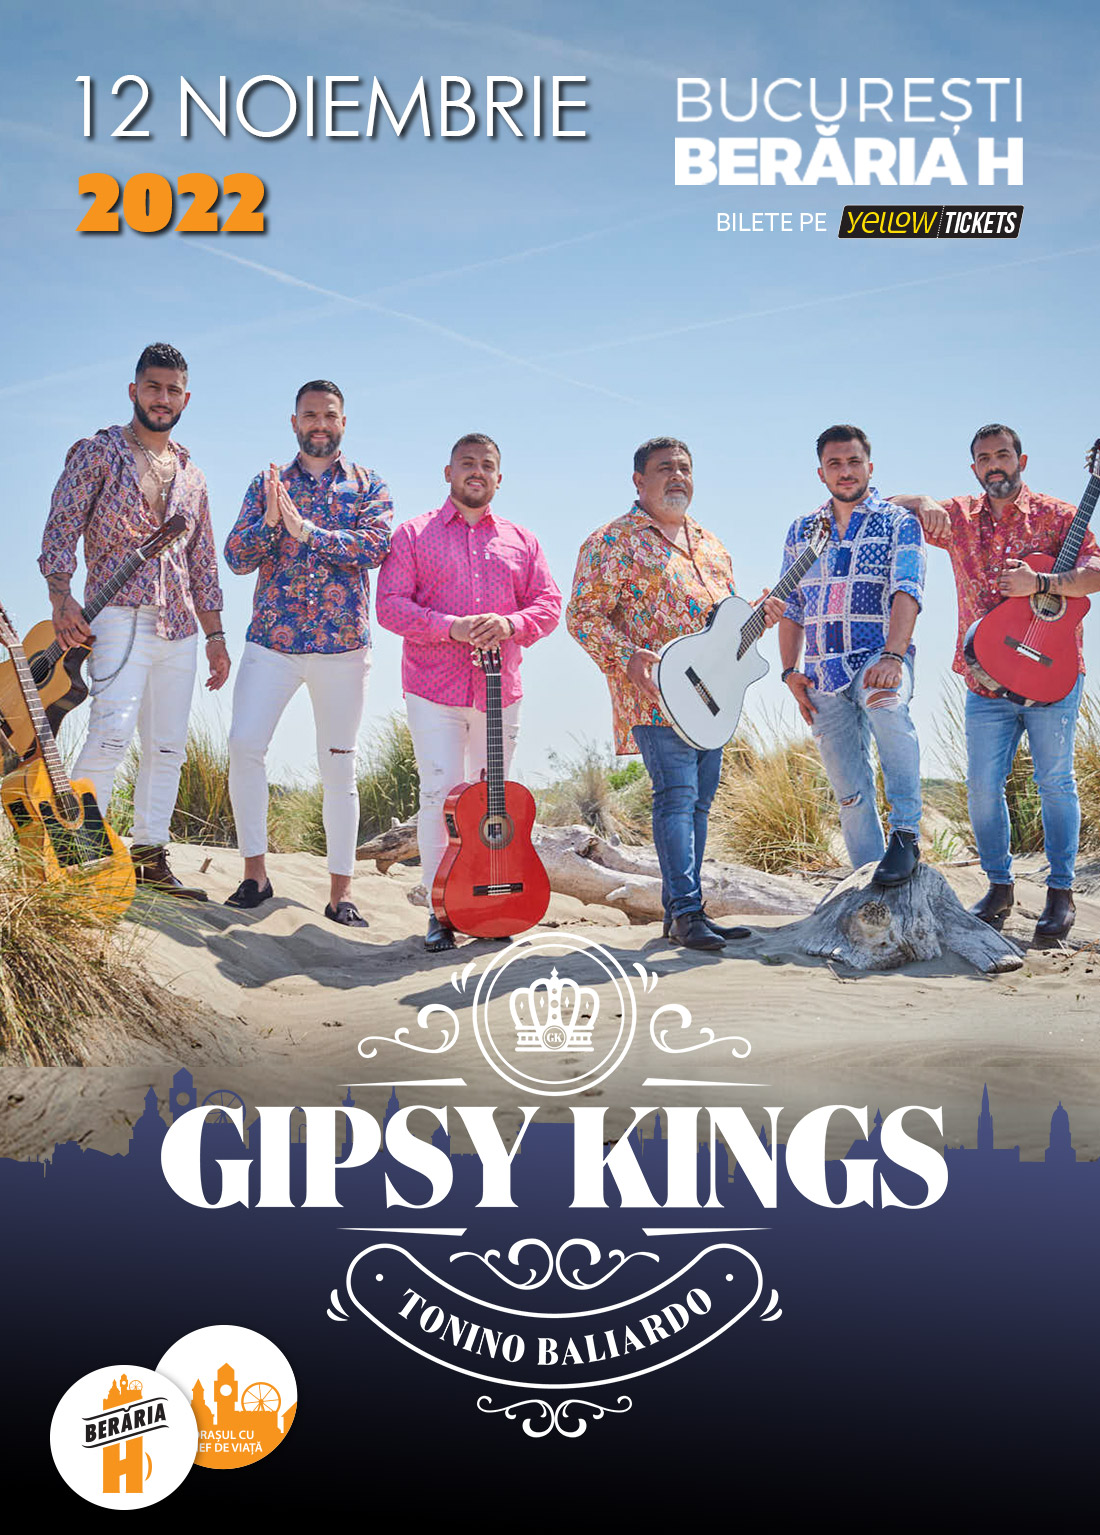 gipsy kings tour 2022 spain